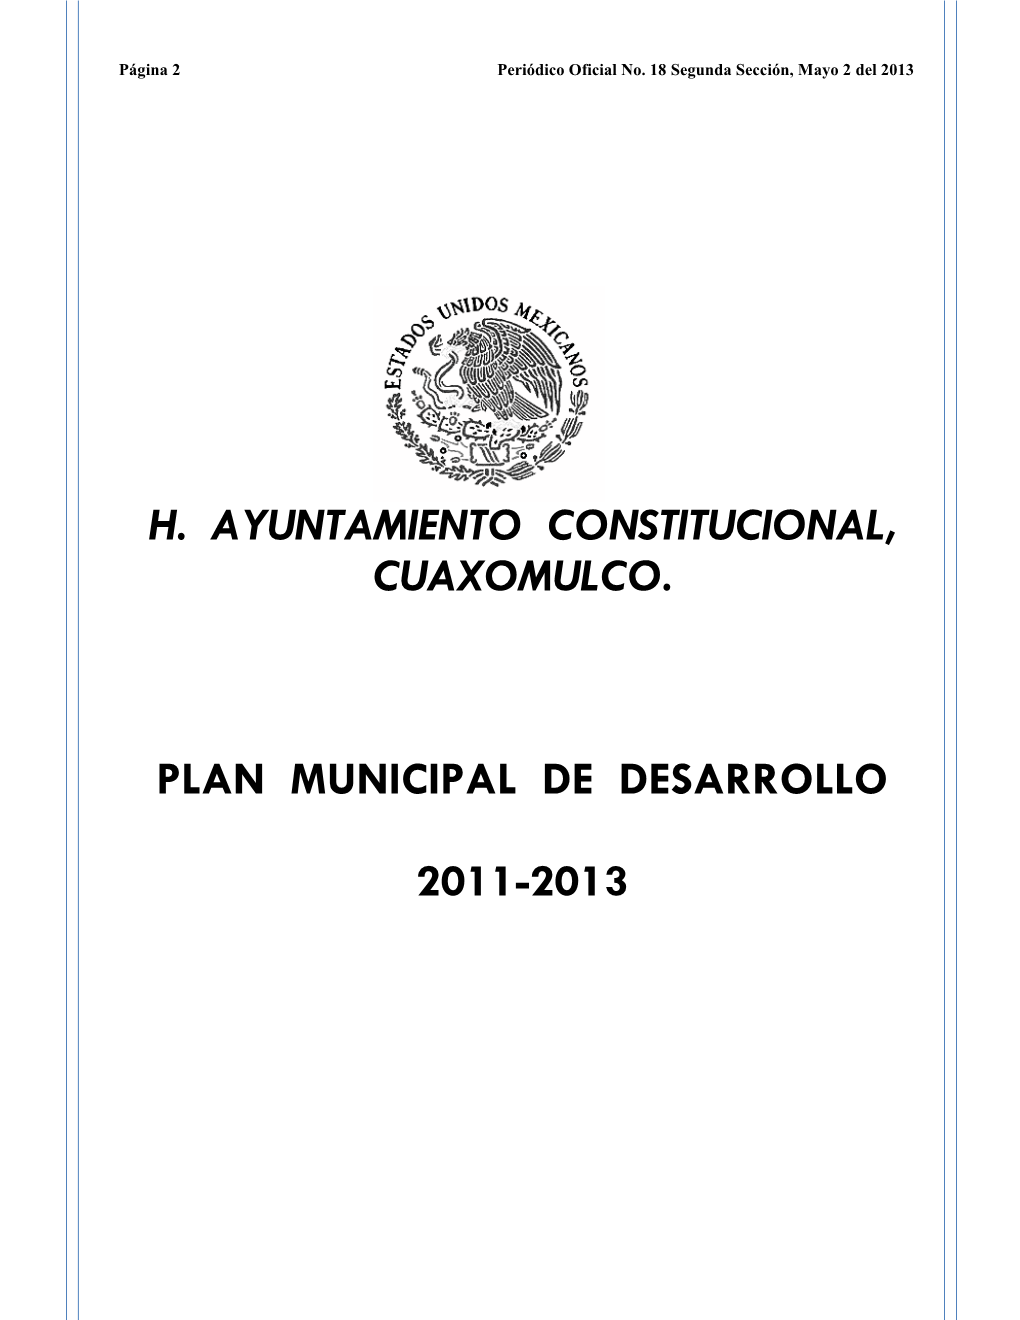 H. Ayuntamiento Constitucional, Cuaxomulco